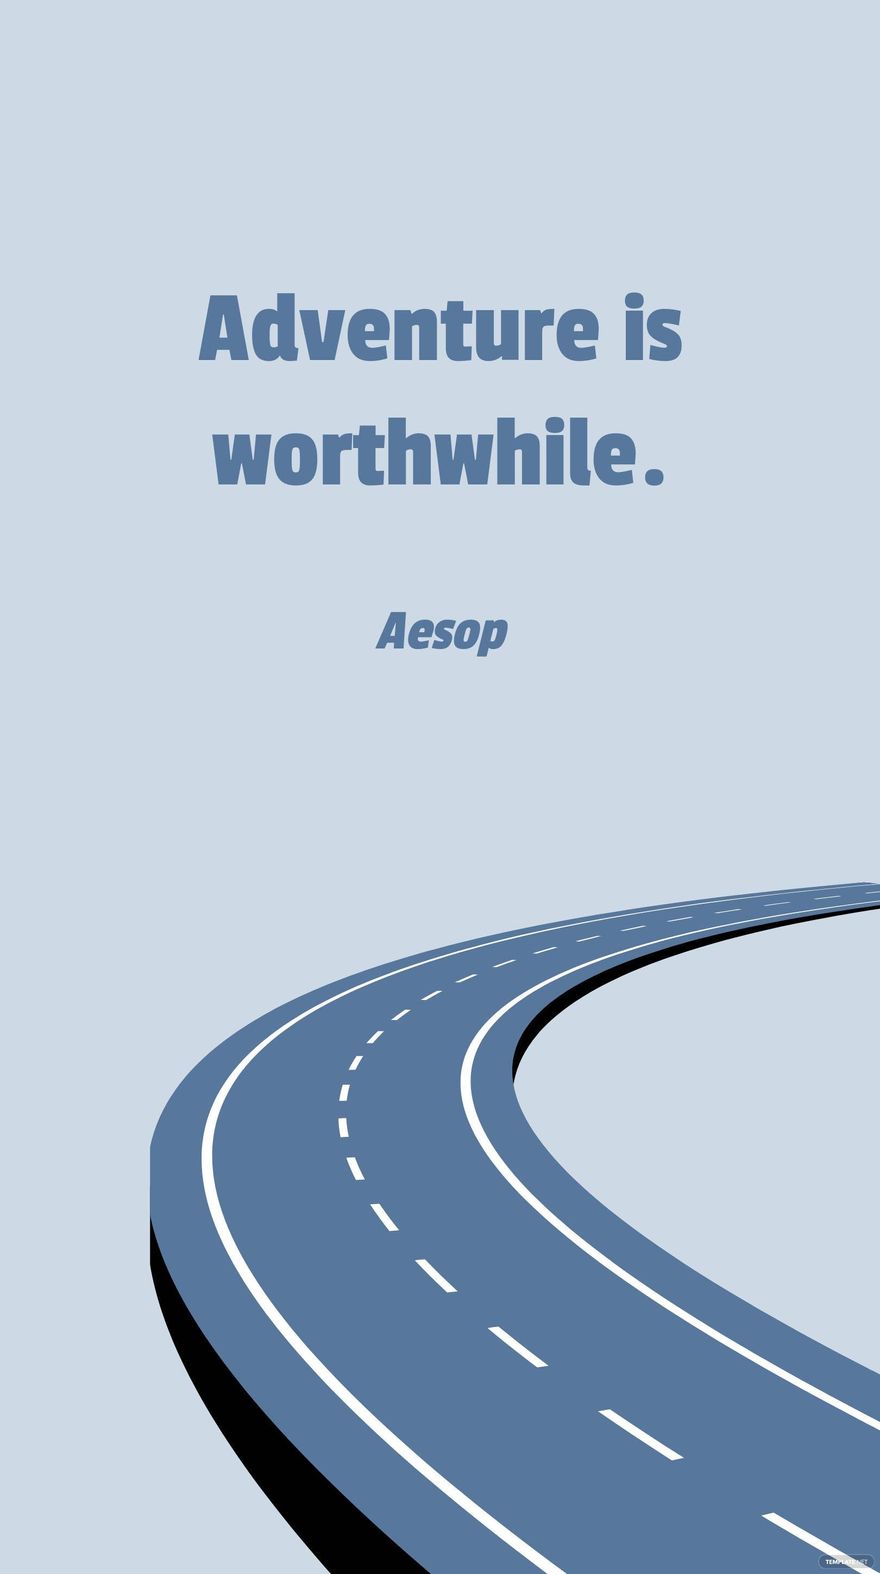 Aesop - Adventure is worthwhile.